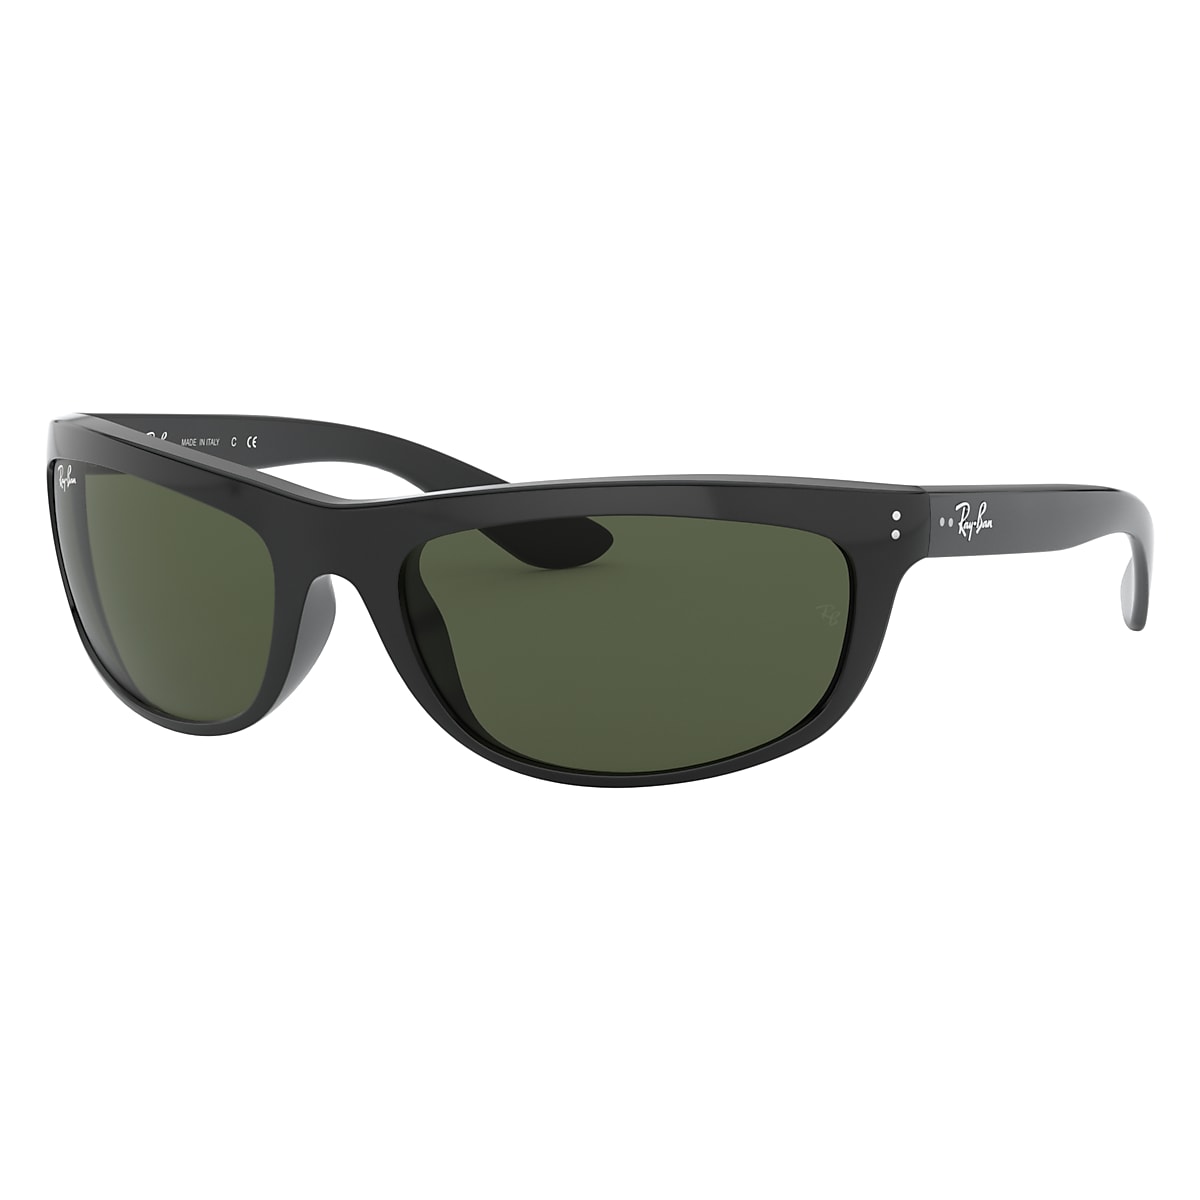 Balorama Sunglasses in Black and Green | Ray-Ban®